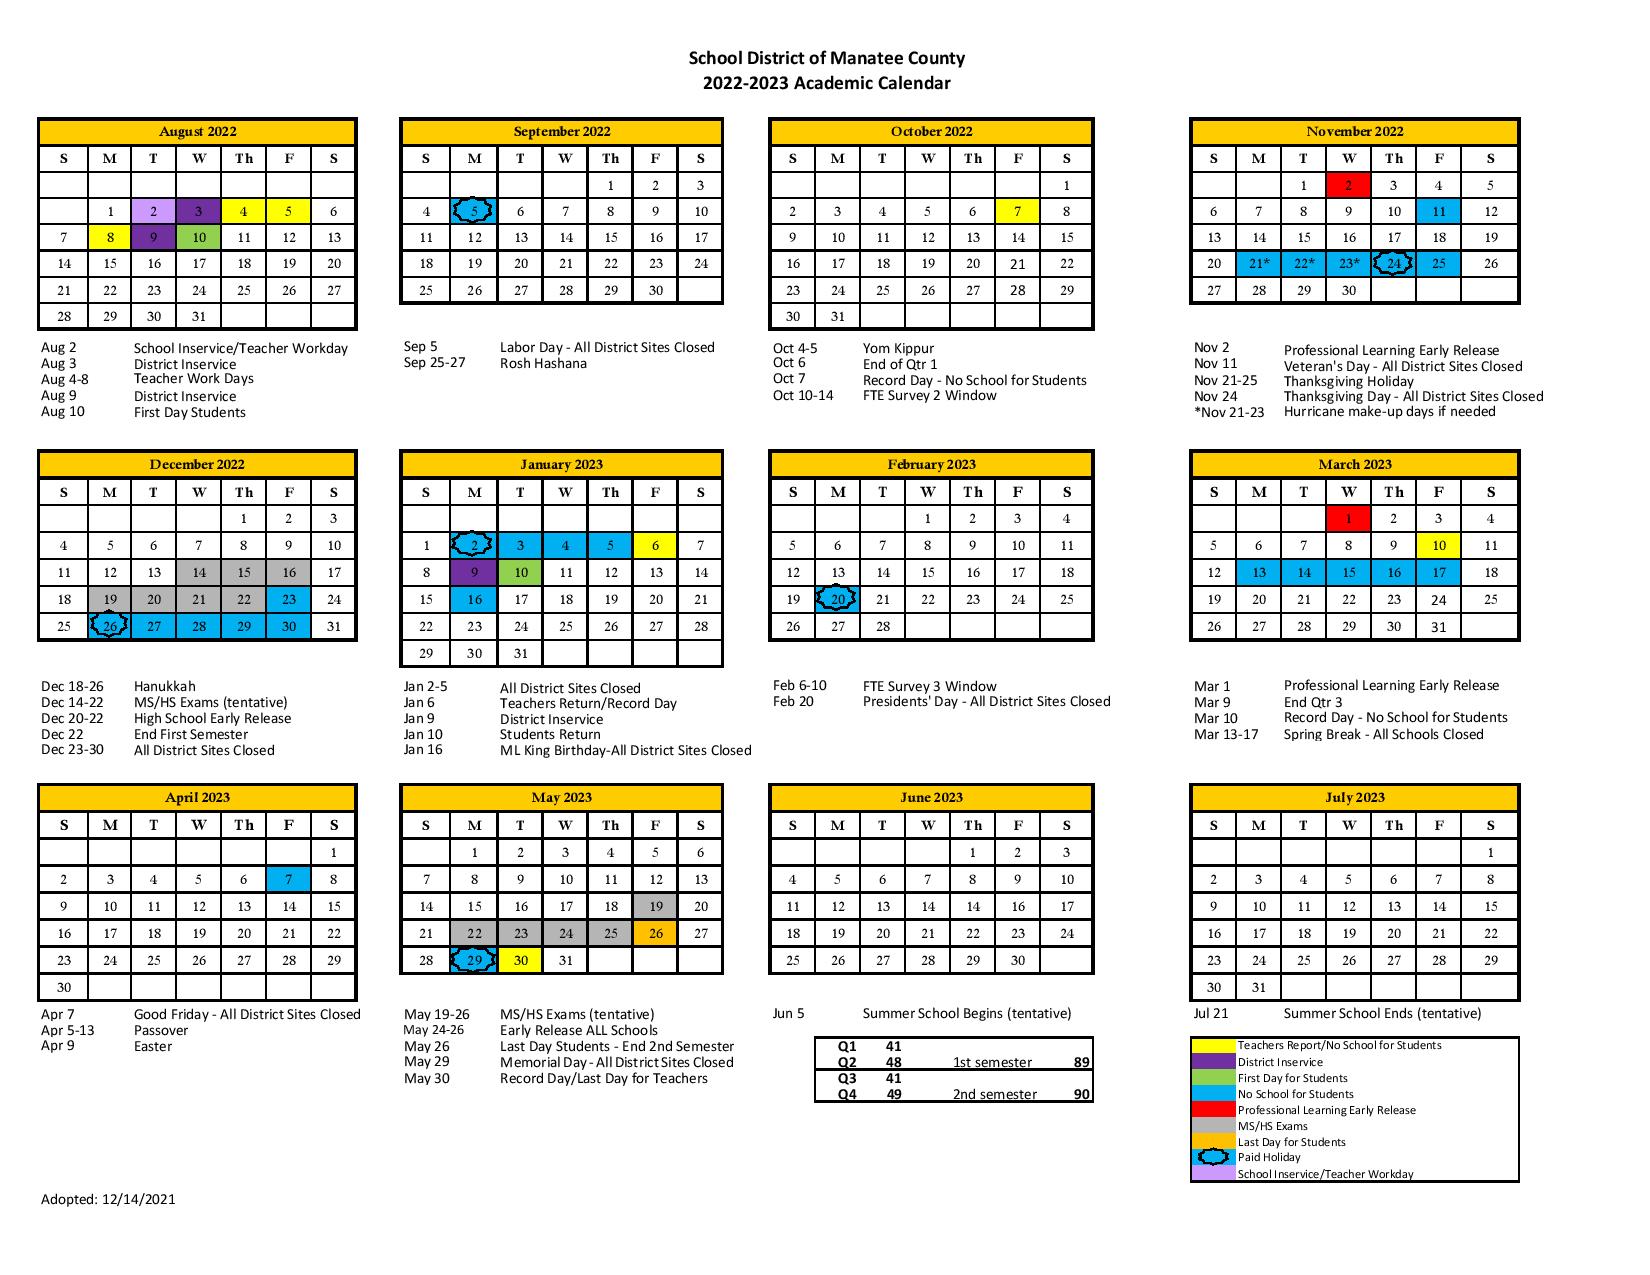 Manatee County School District Calendar 2022 2023